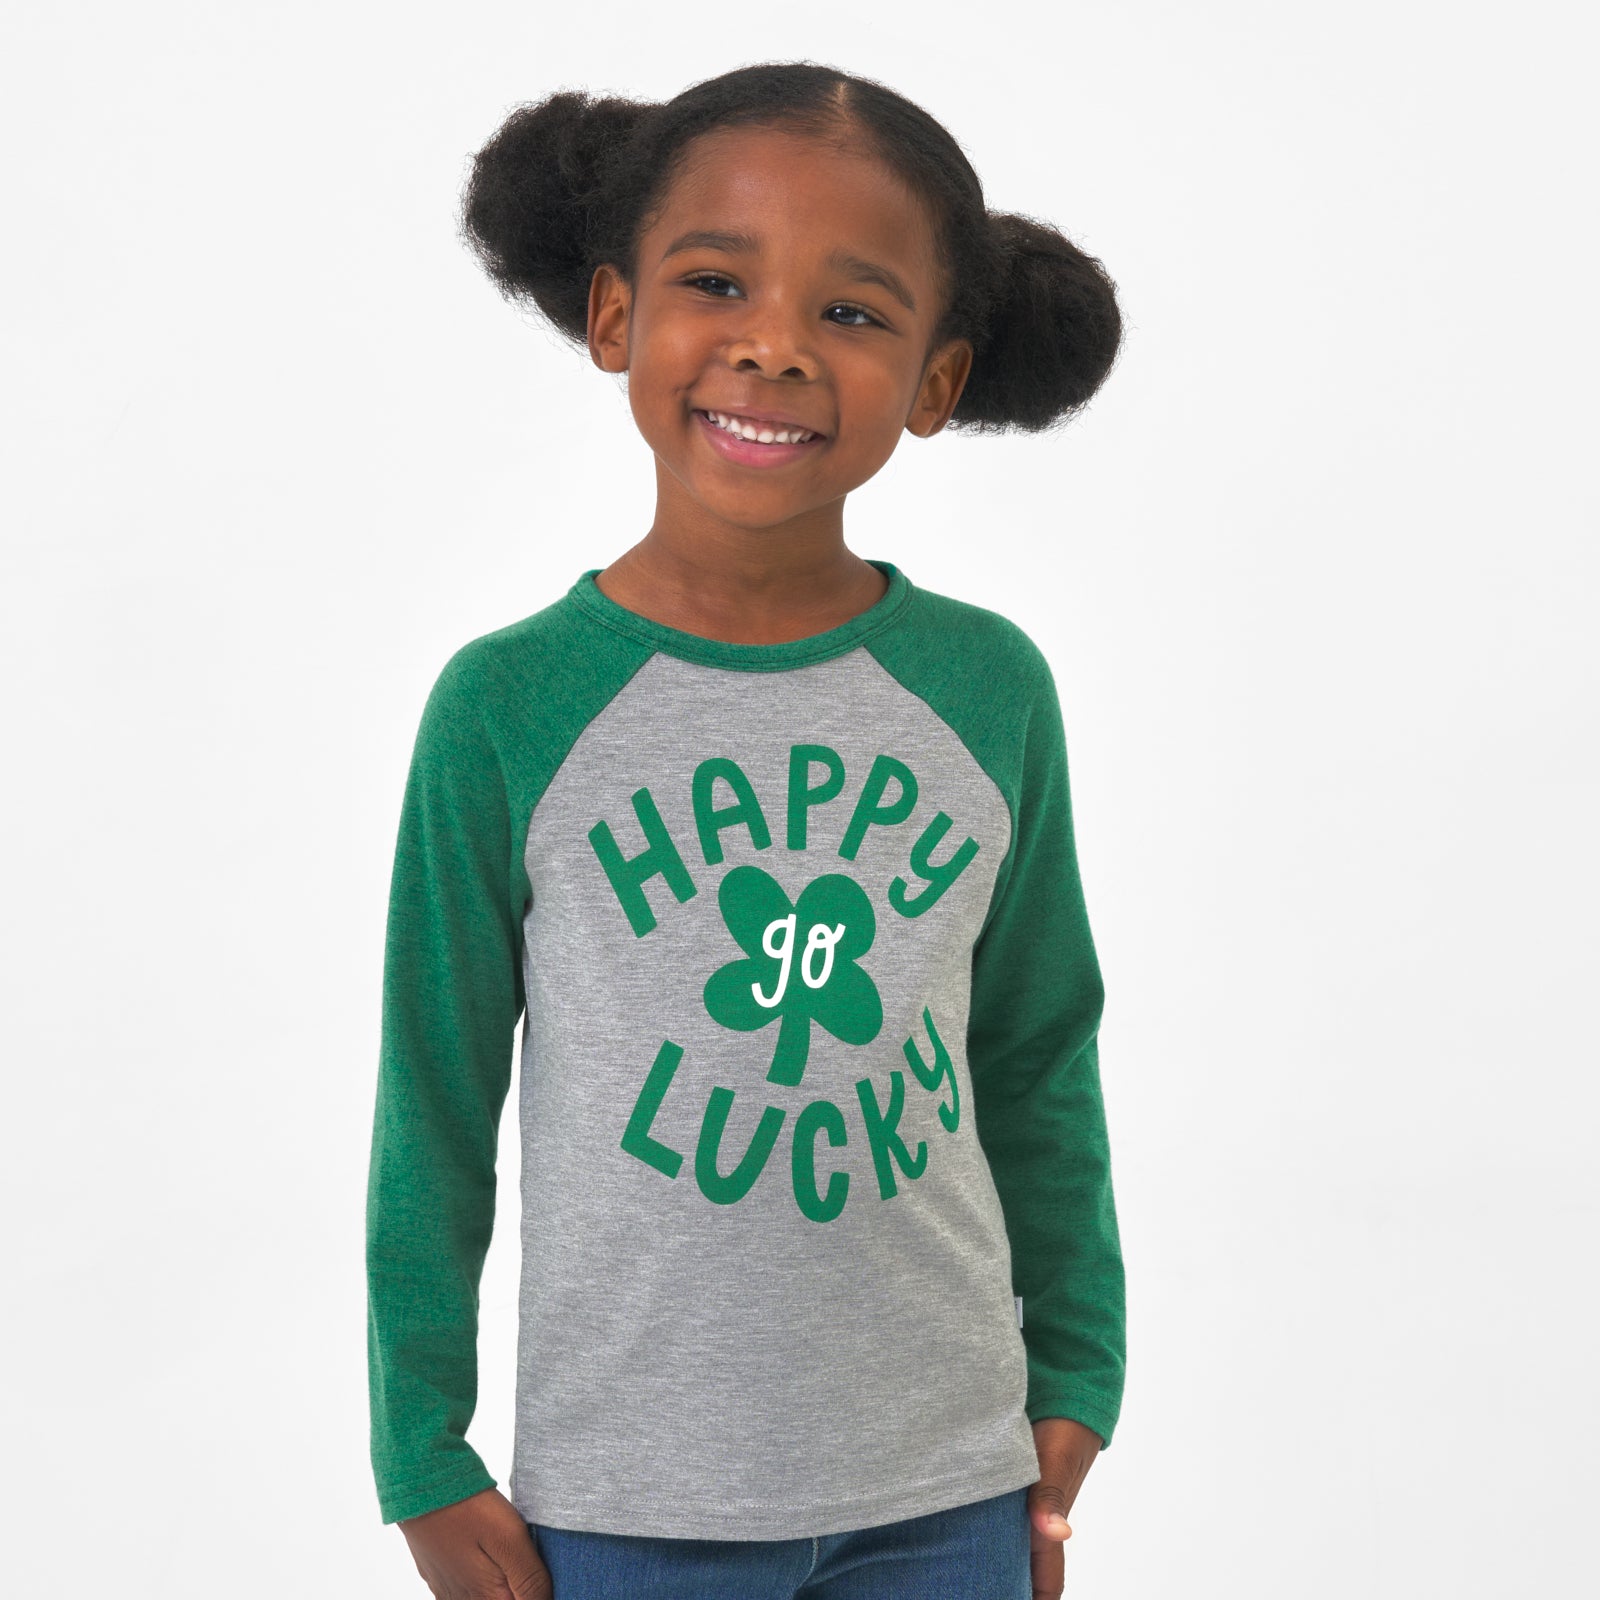 Child wearing a Happy Go Lucky raglan tee